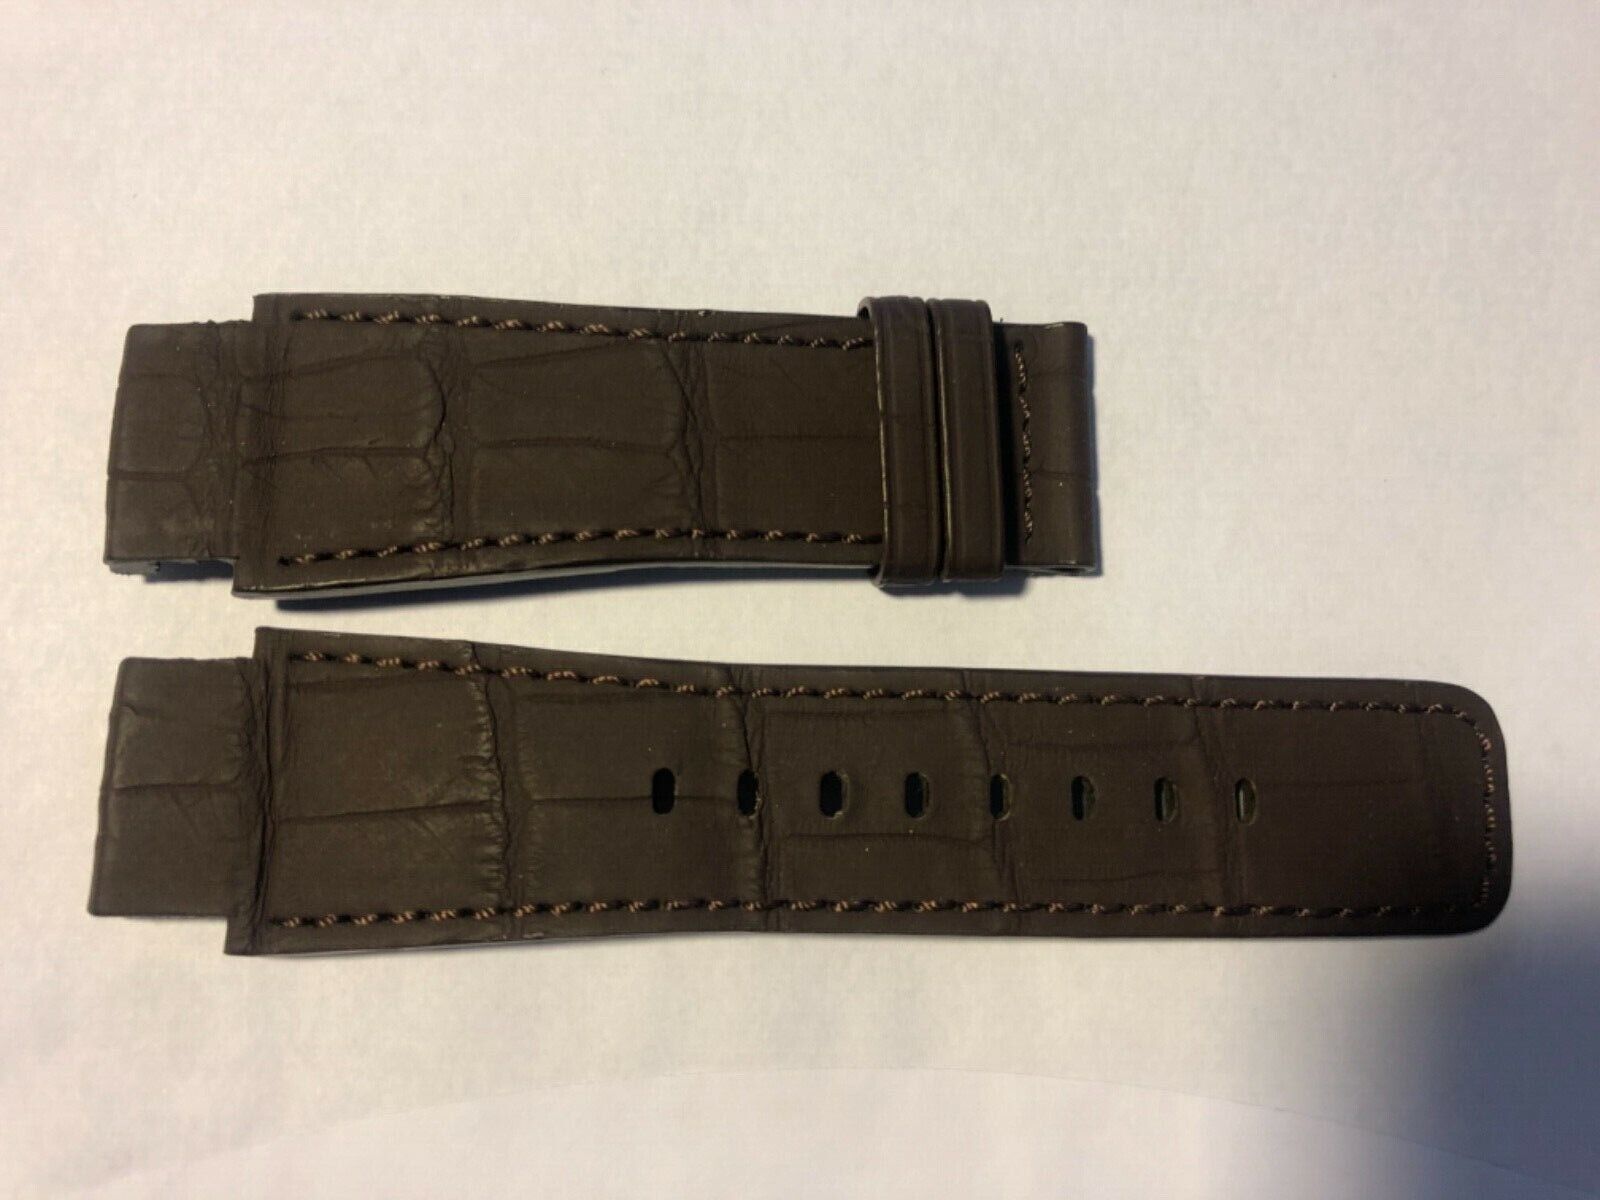 New Clerc Hydroscaph watch brown alligator / rubber strap band bracelet